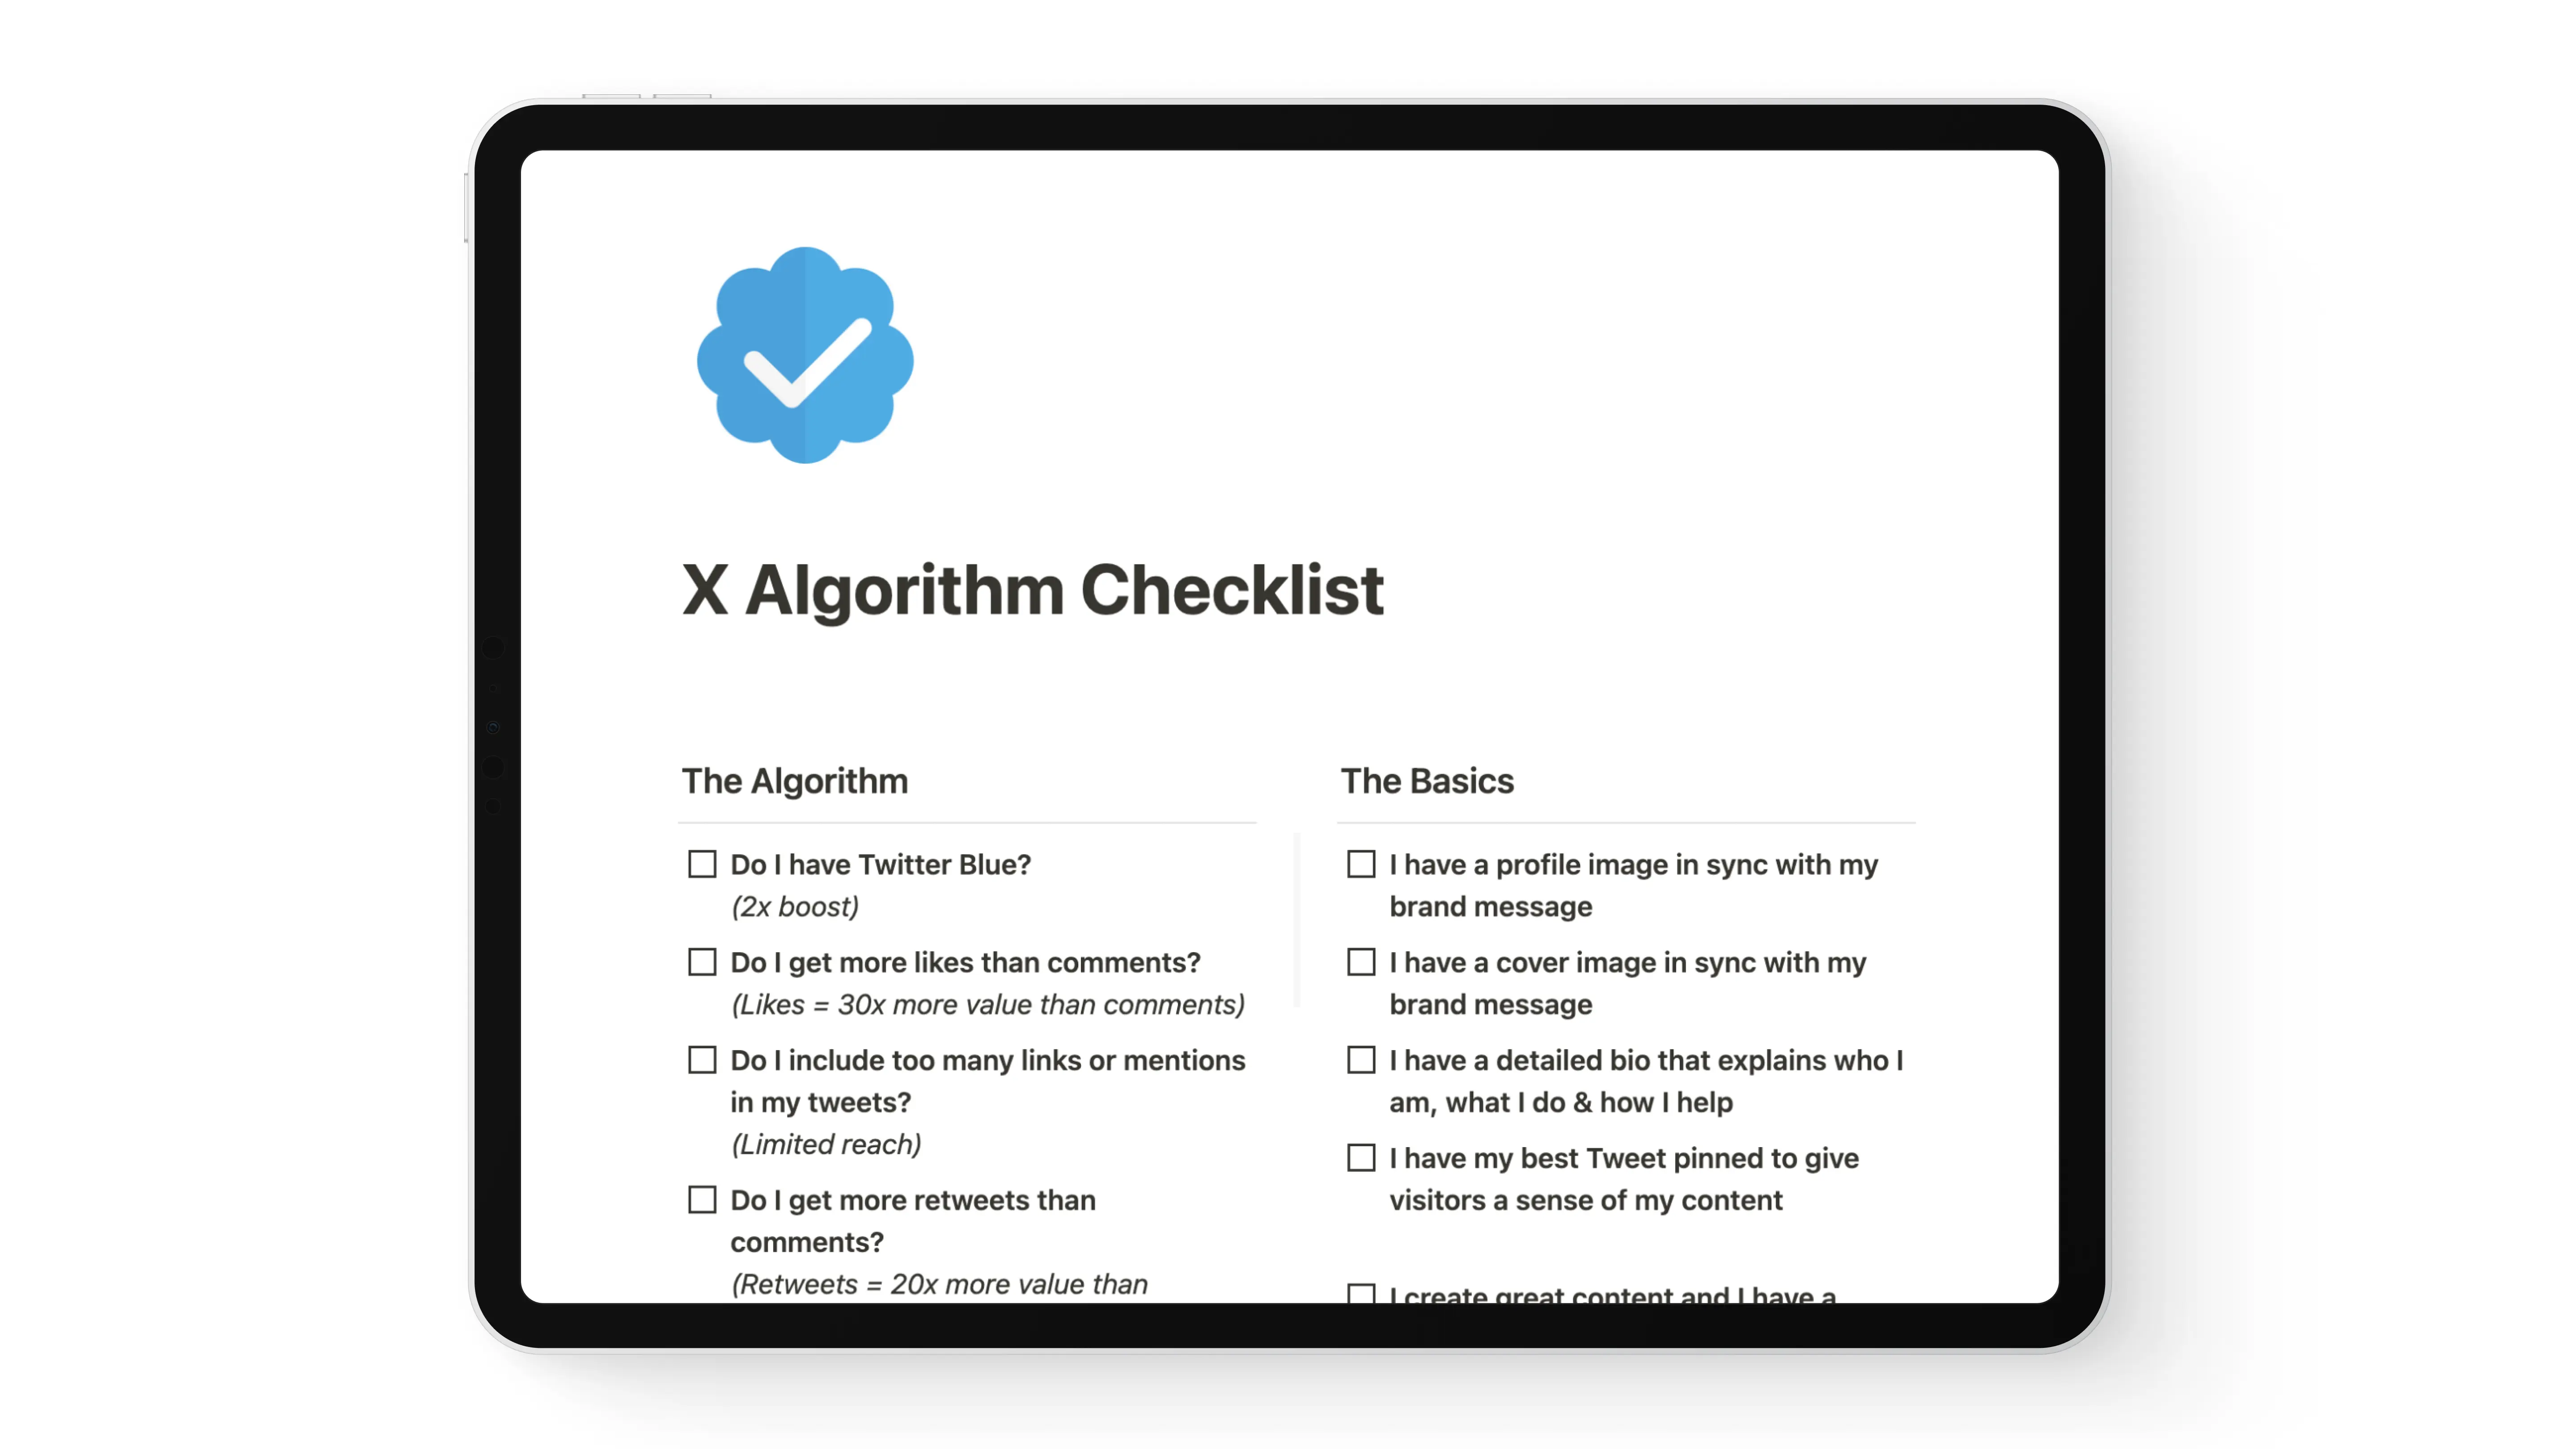 Twitter Algorithm Checklist image